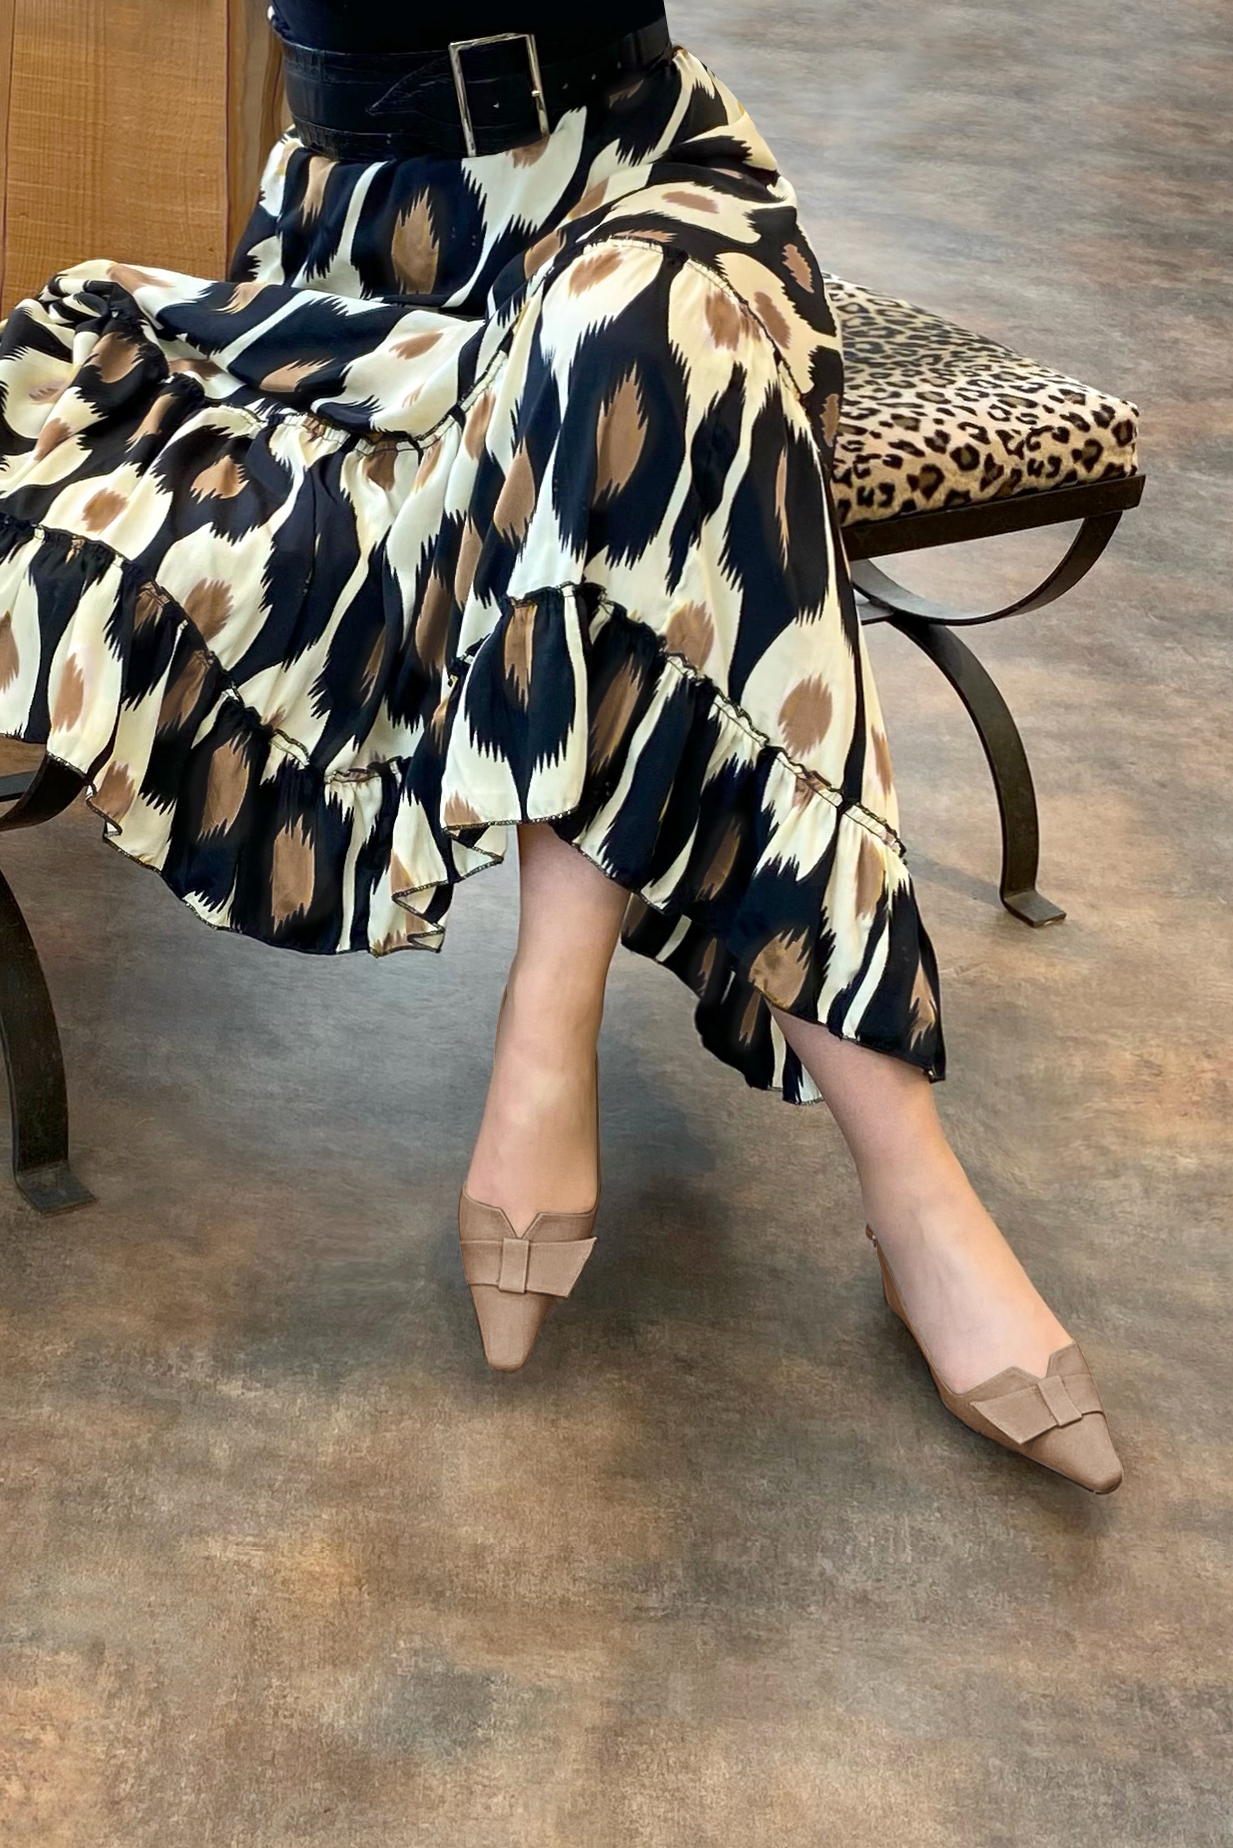 Tan beige women's open back shoes, with a knot. Tapered toe. Low block heels. Worn view - Florence KOOIJMAN